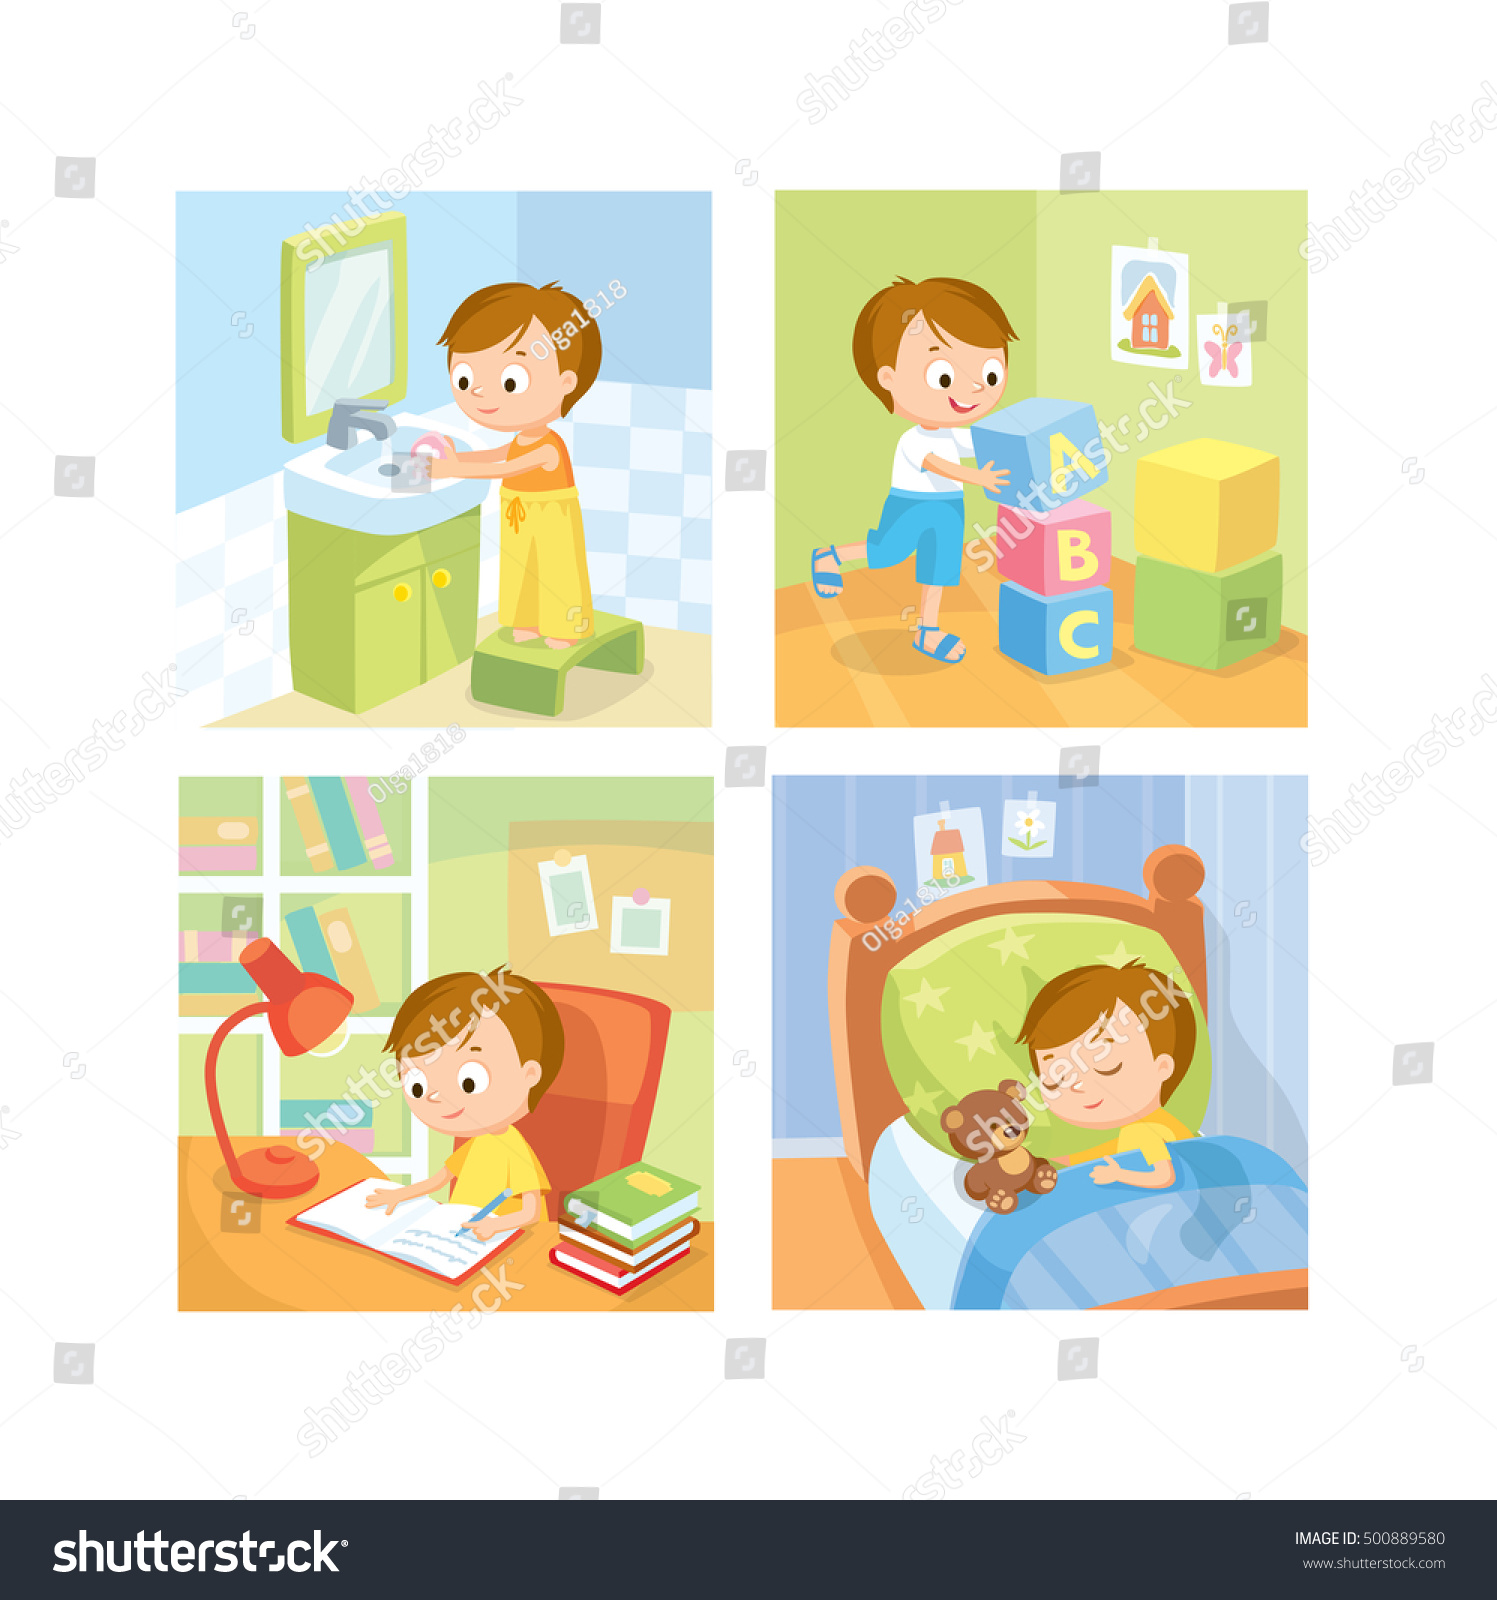 Children Daily Routine Stock Vector Illustration 500889580 : Shutterstock